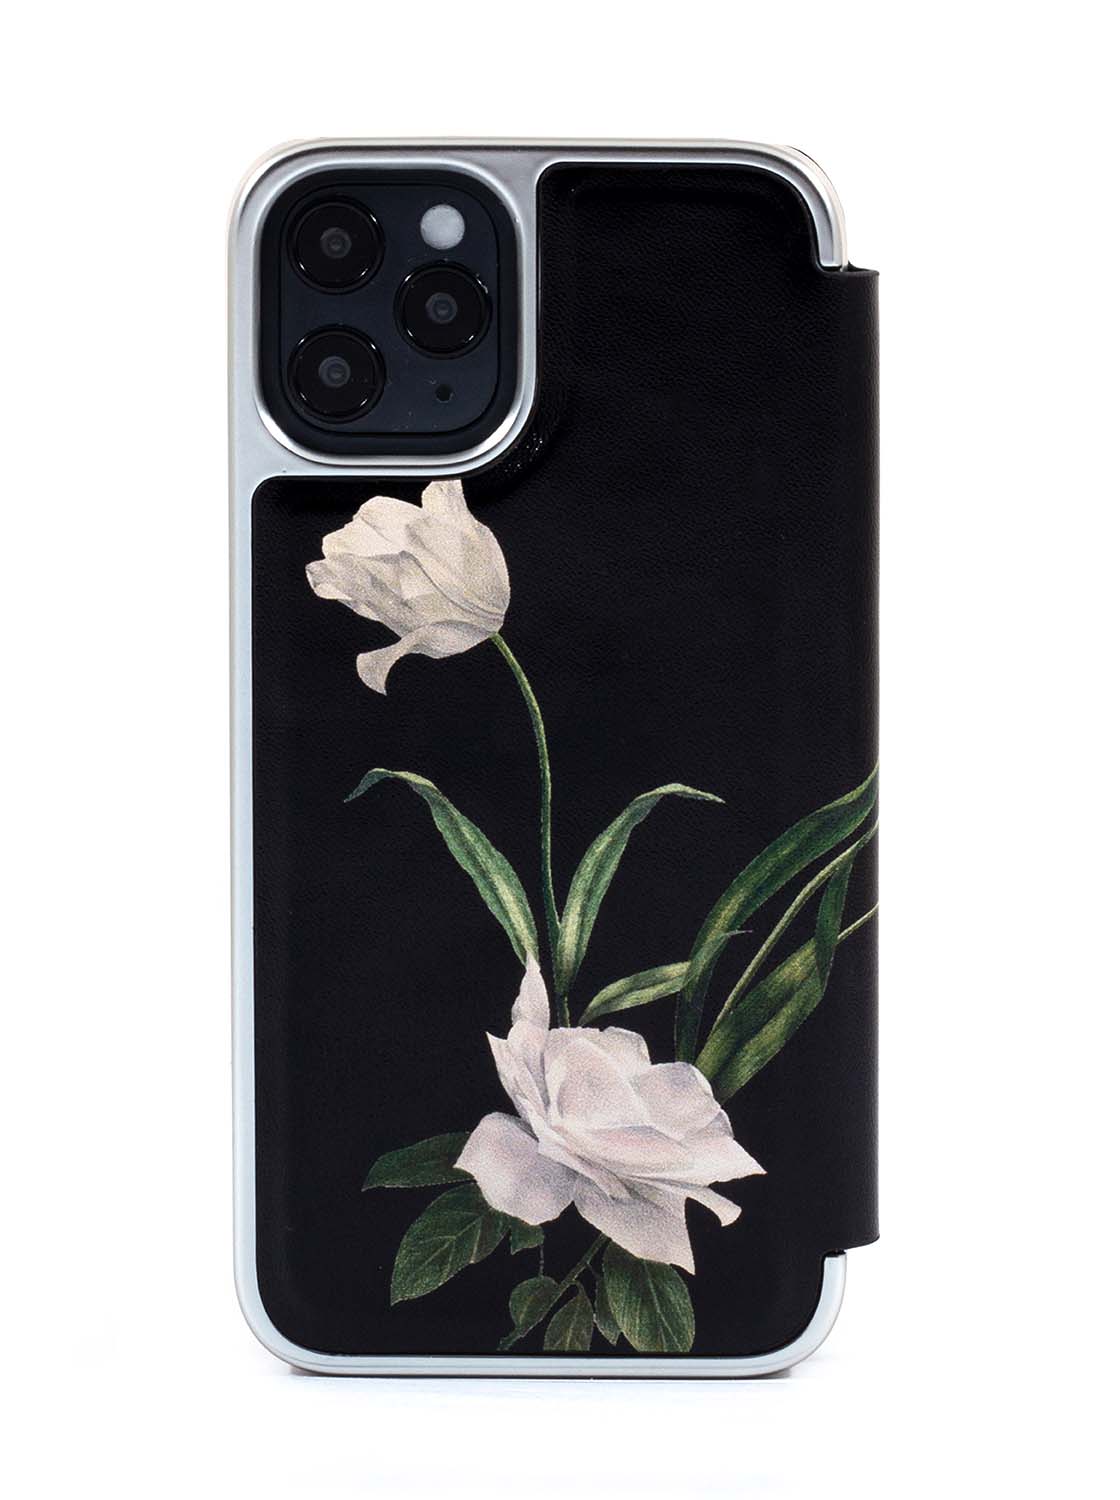 Ted Baker iPhone 12 / 12 Pro Mirror Folio Case - Elegant Book Case w/ Built-in Mirror, Wireless Charging Compatible, Women/Girls Phone Case - Elder Flower Black Silver